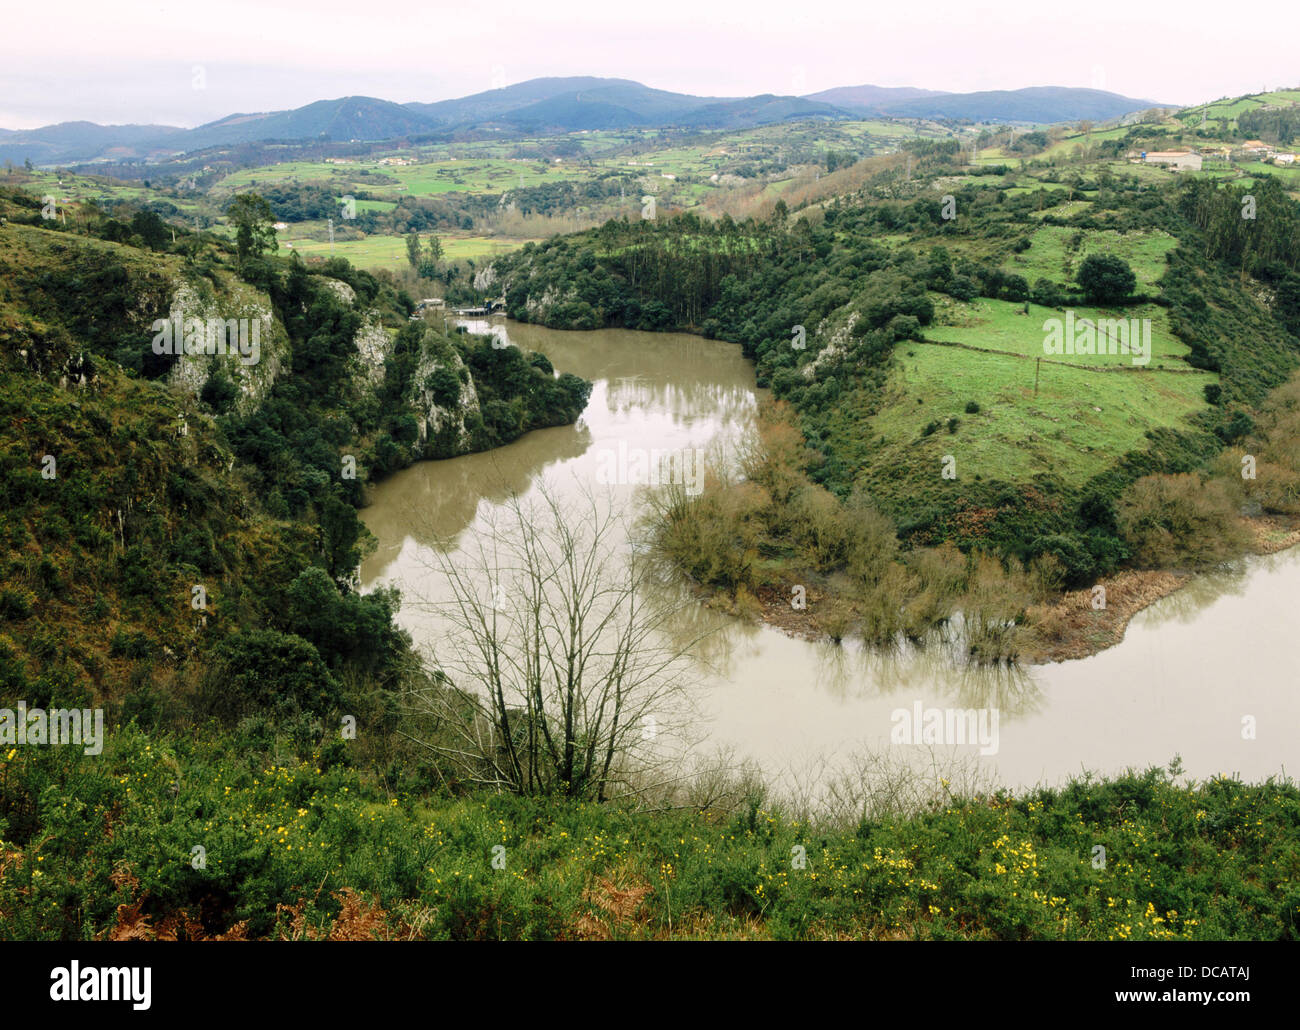 Nora river meanders, Priañes, Las Regueras. Asturias, Spain Stock Photo -  Alamy